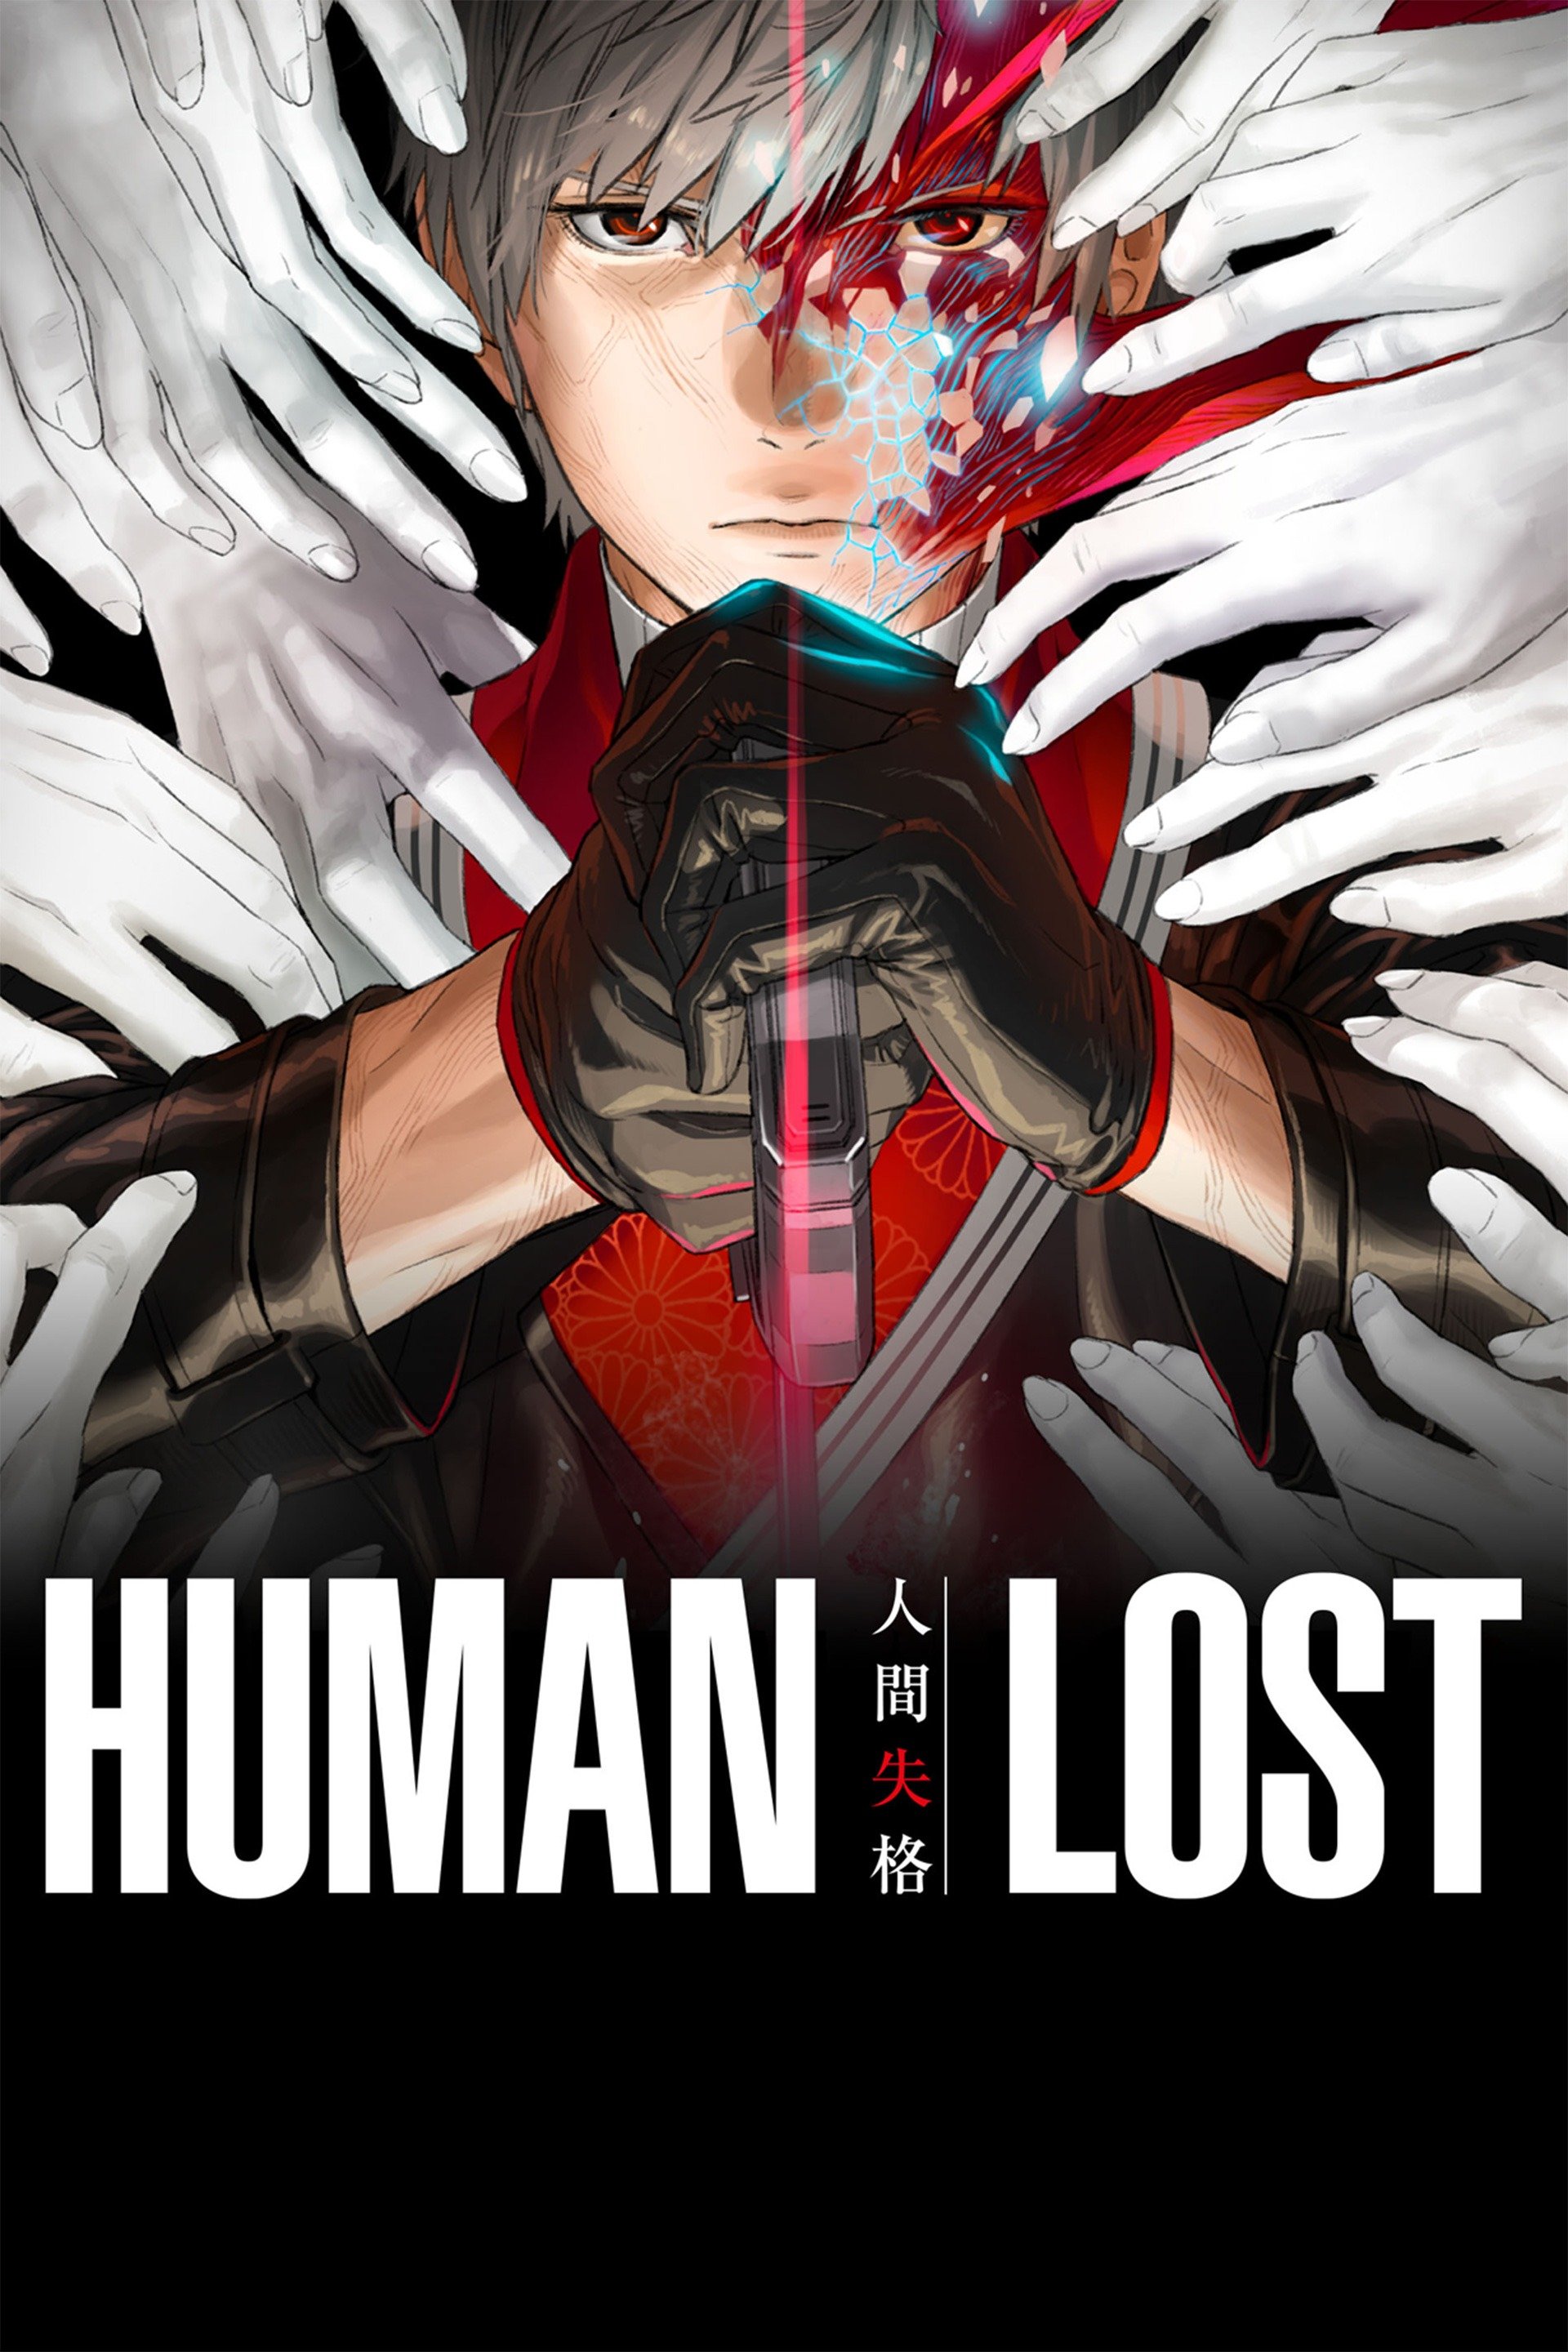 Human Lost Anime Film New Trailer Drops Worldwide Release Announced For  Fall 2019  MOSHI MOSHI NIPPON  もしもしにっぽん